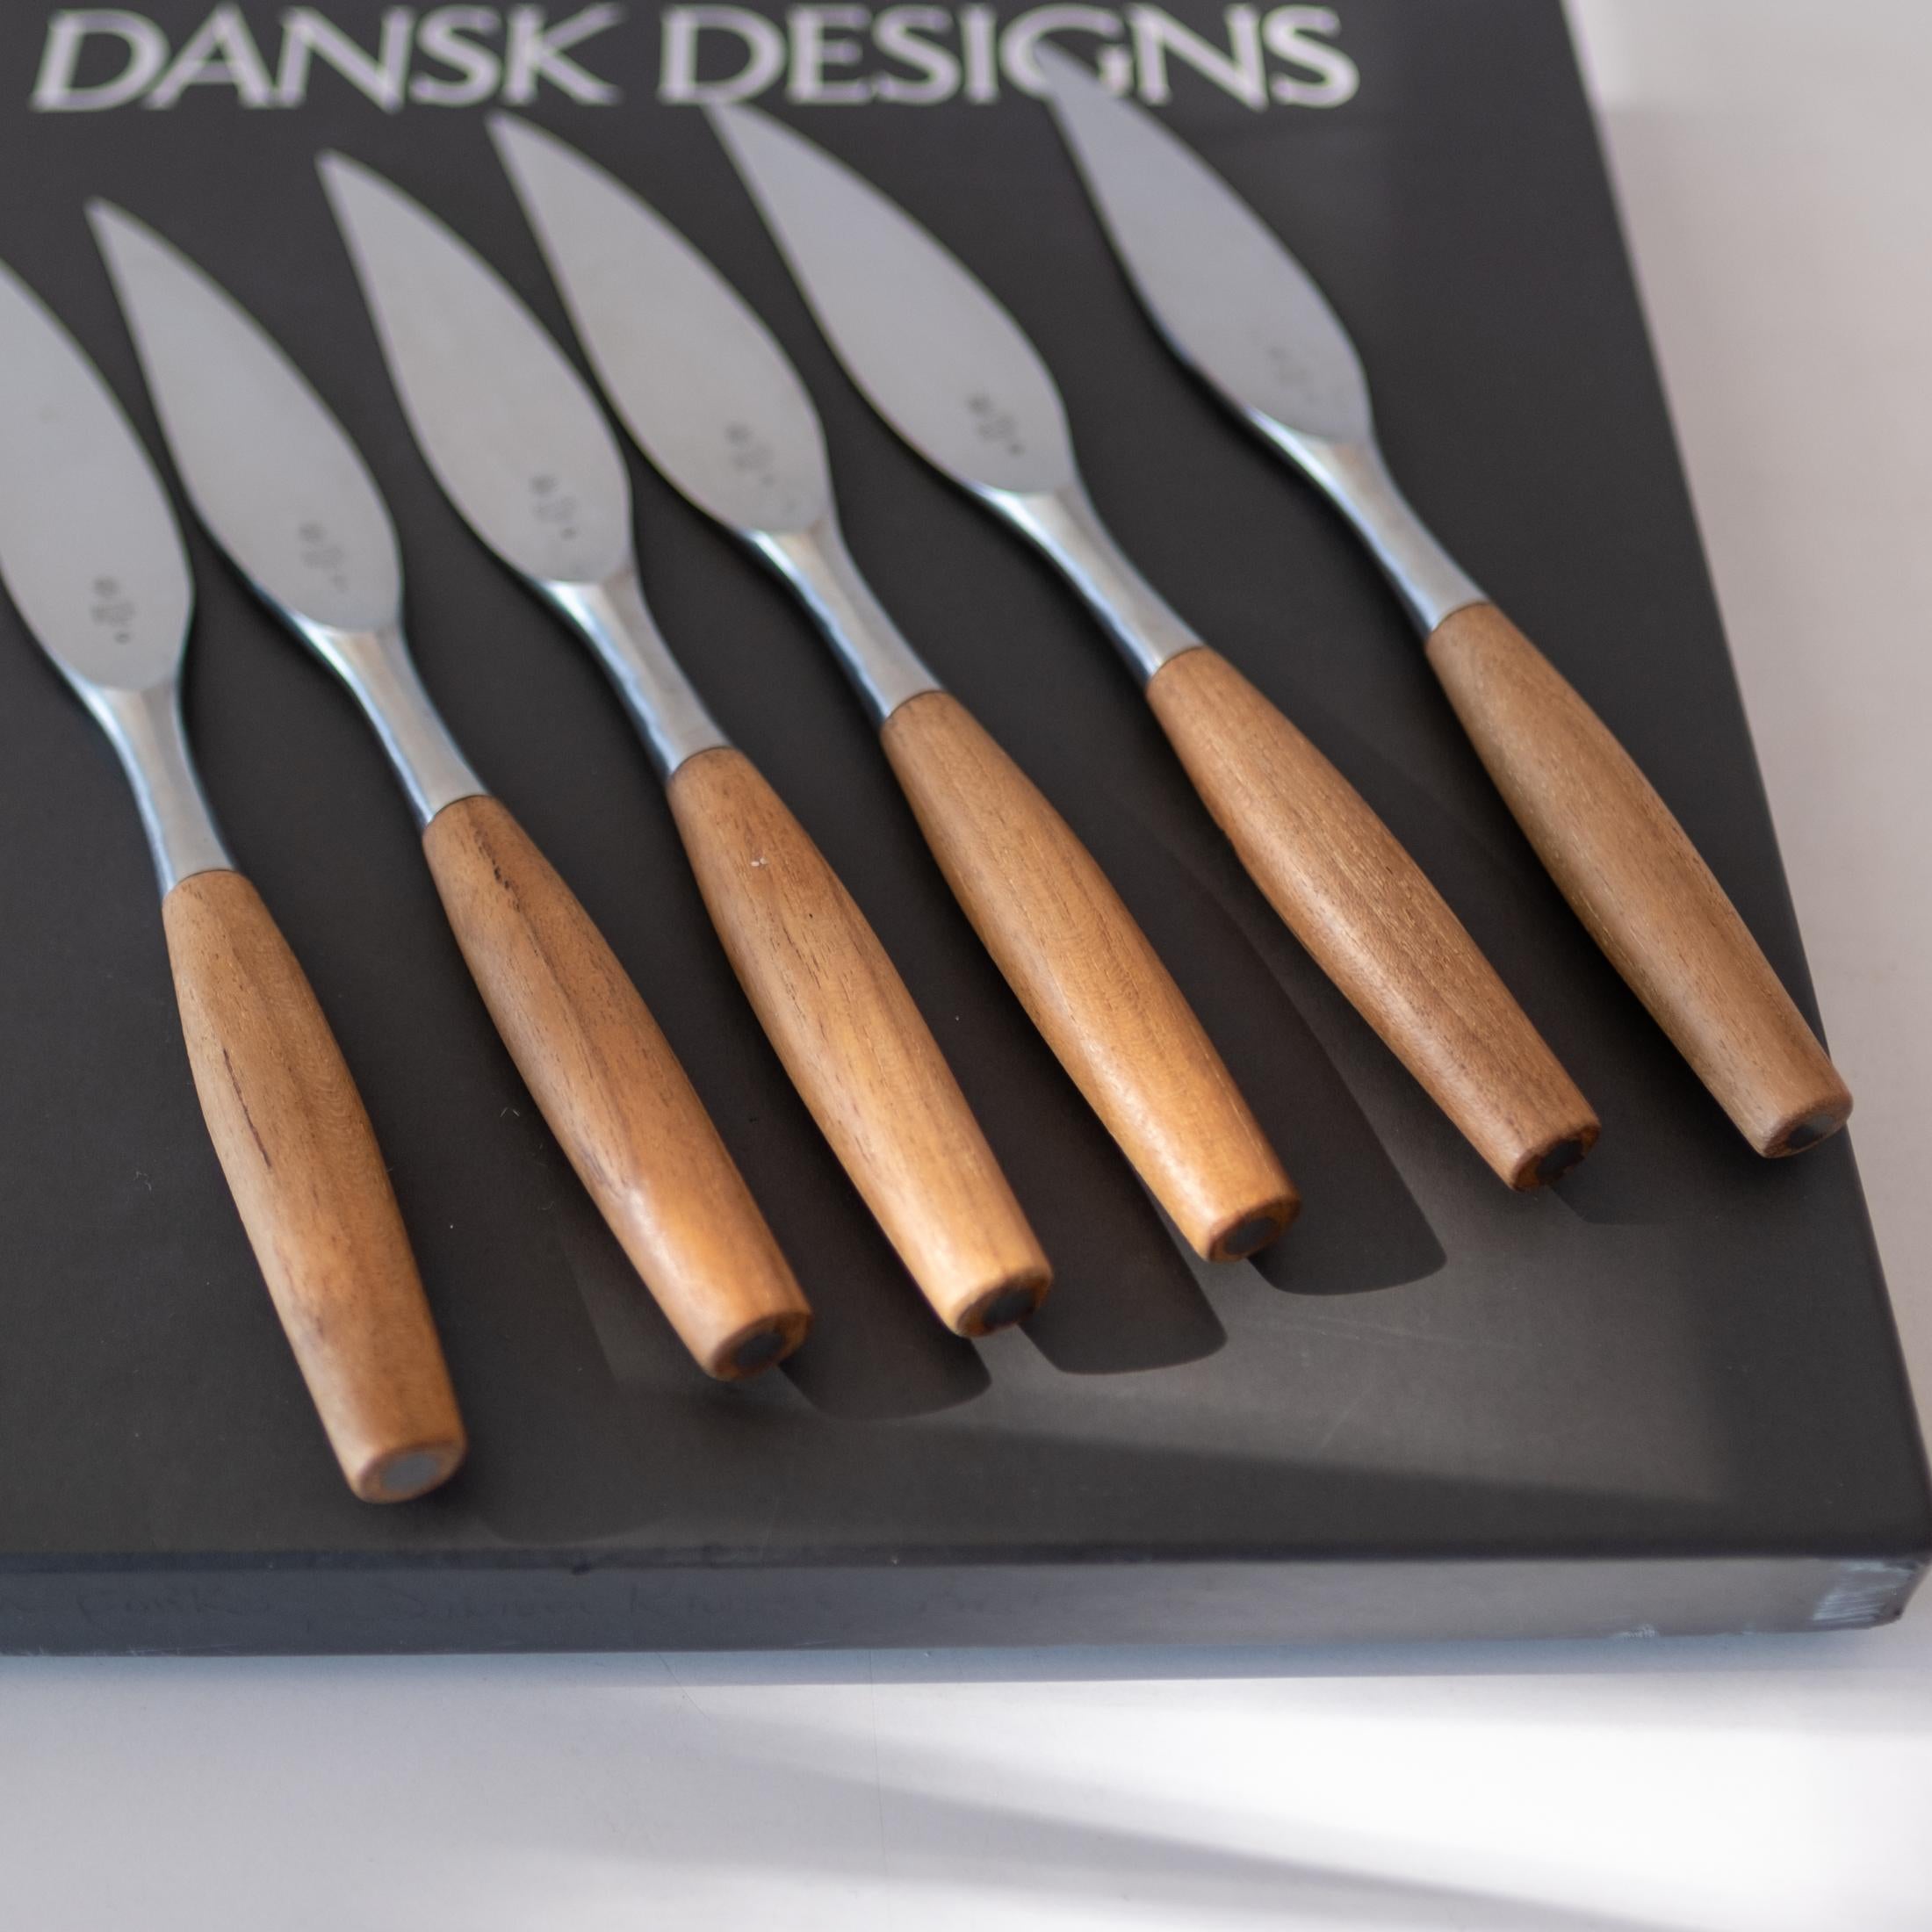 Stainless Steel Steak Knives by Jens Quistgaard for Dansk For Sale